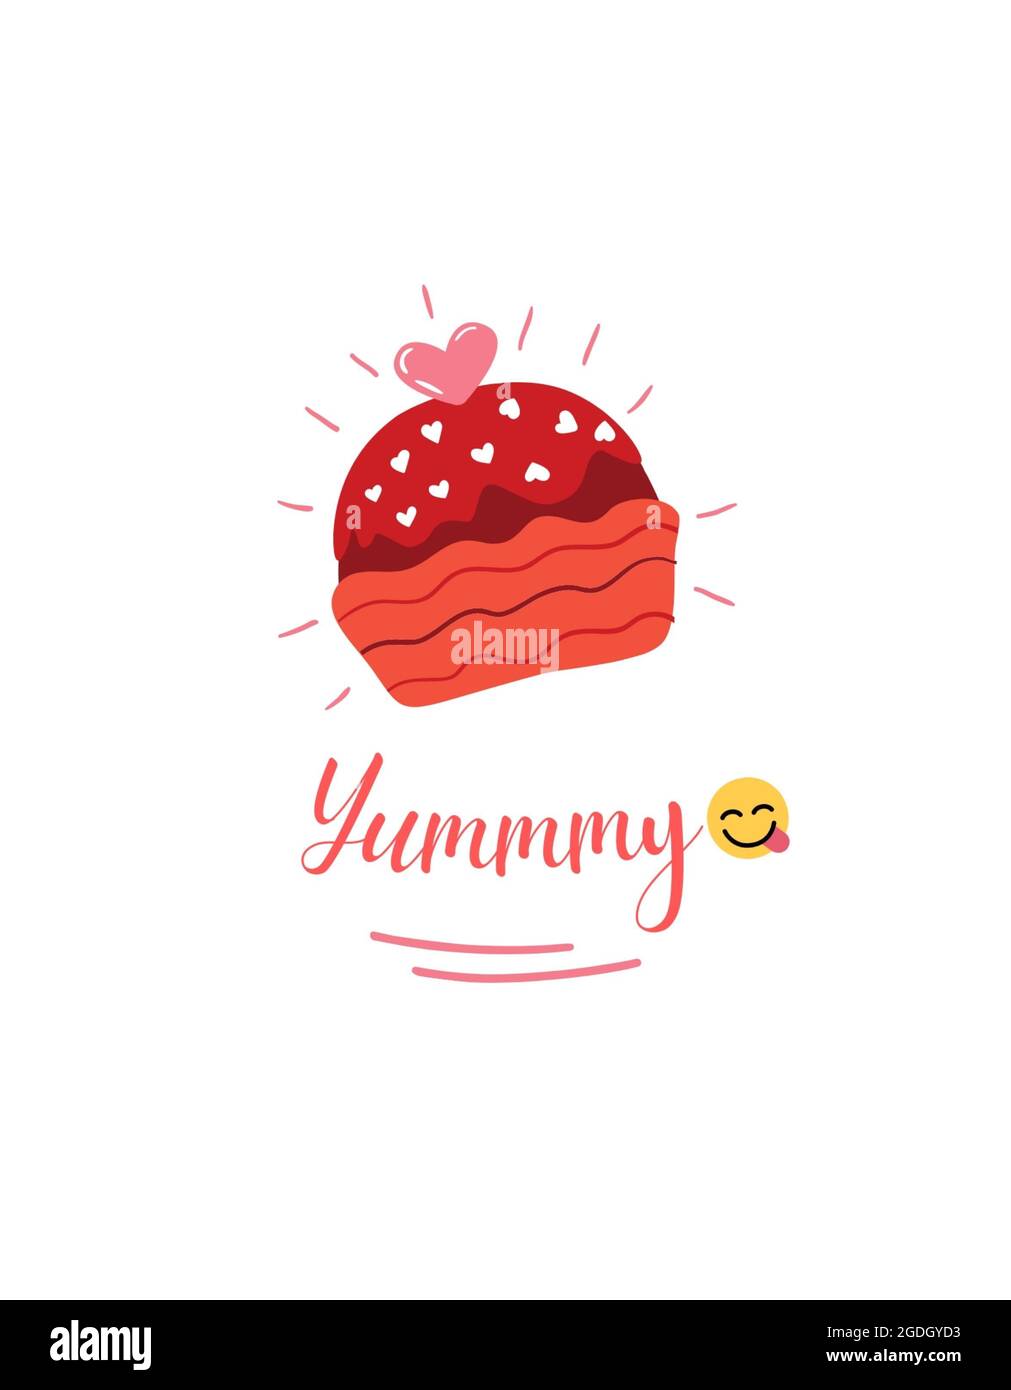 Yummy typography cake design Stock Photo